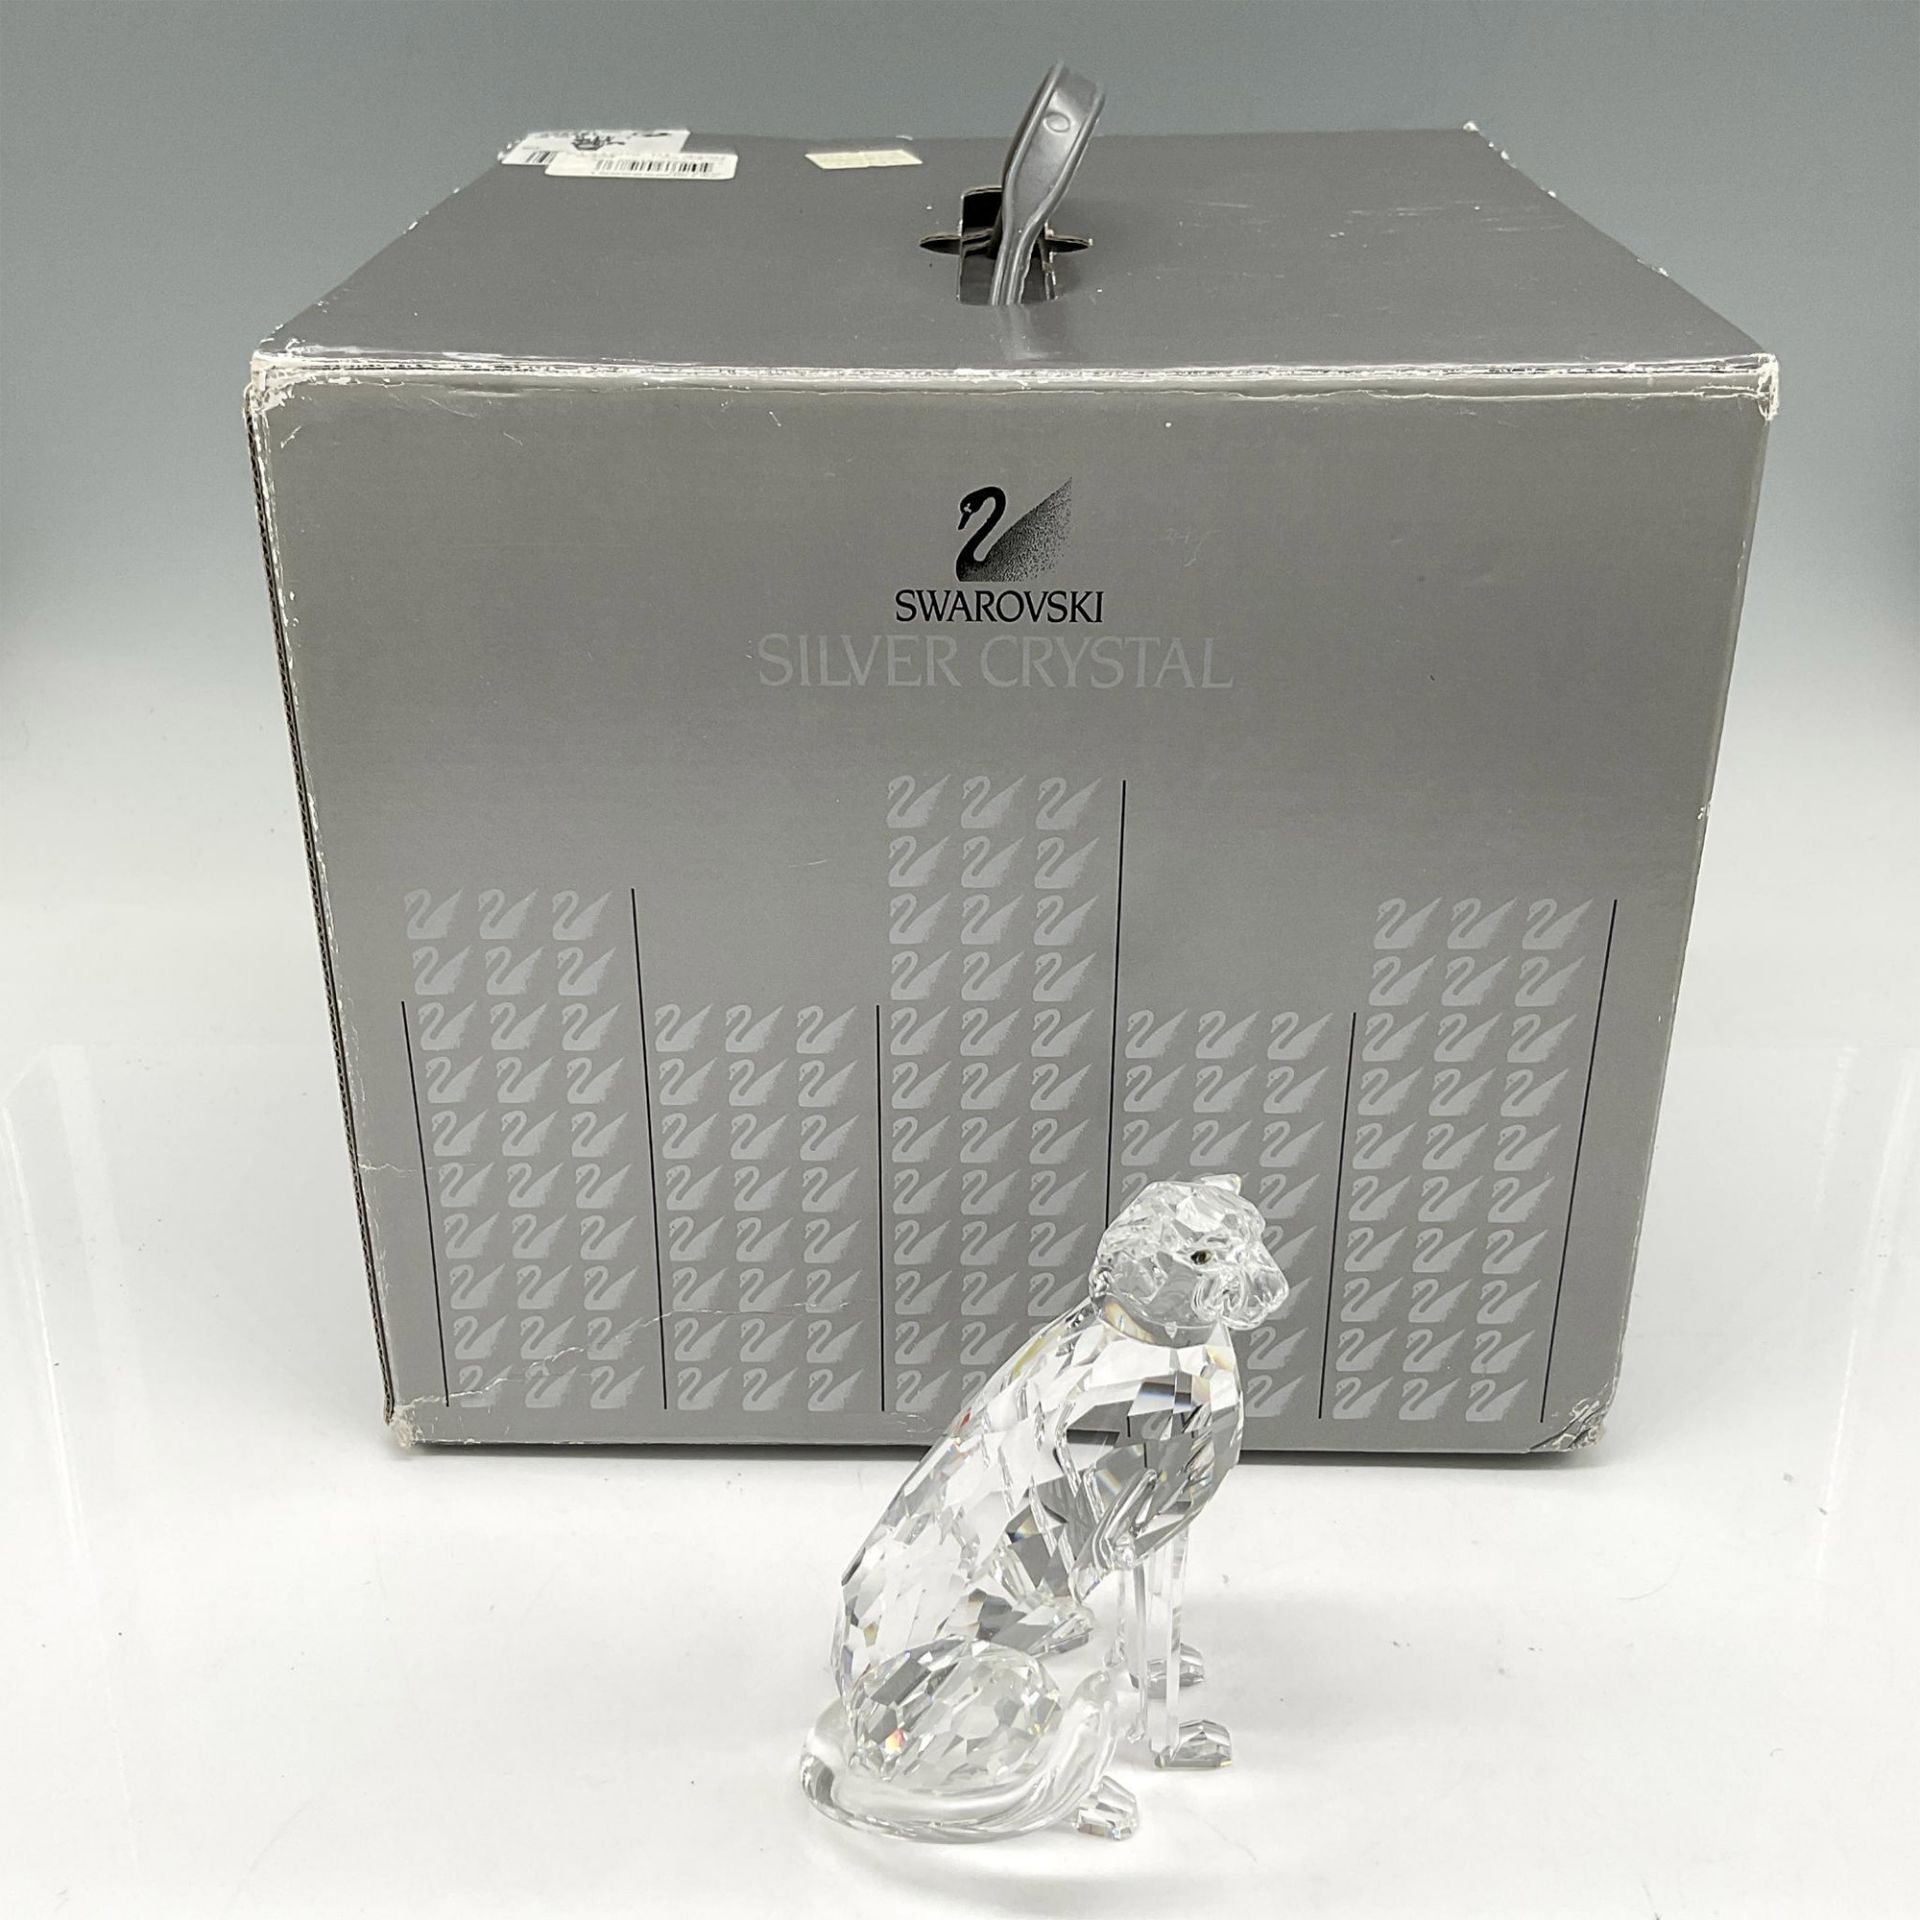 Swarovski Silver Crystal Figurine, Cheetah - Image 4 of 4